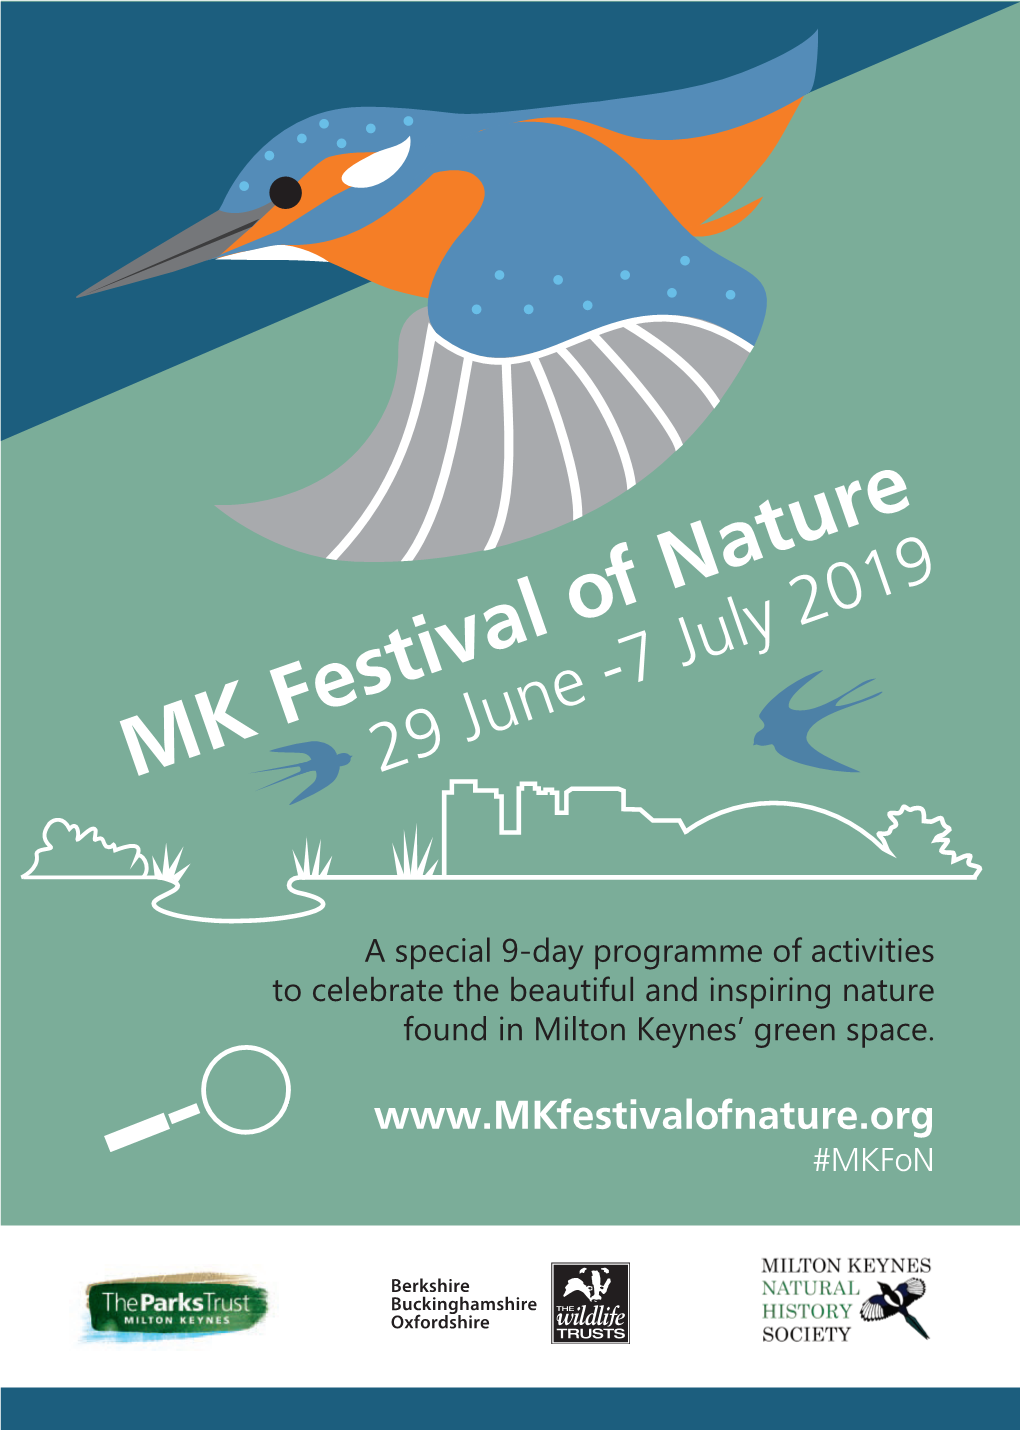 Festival of Nature MK 29 June -7 July 2019